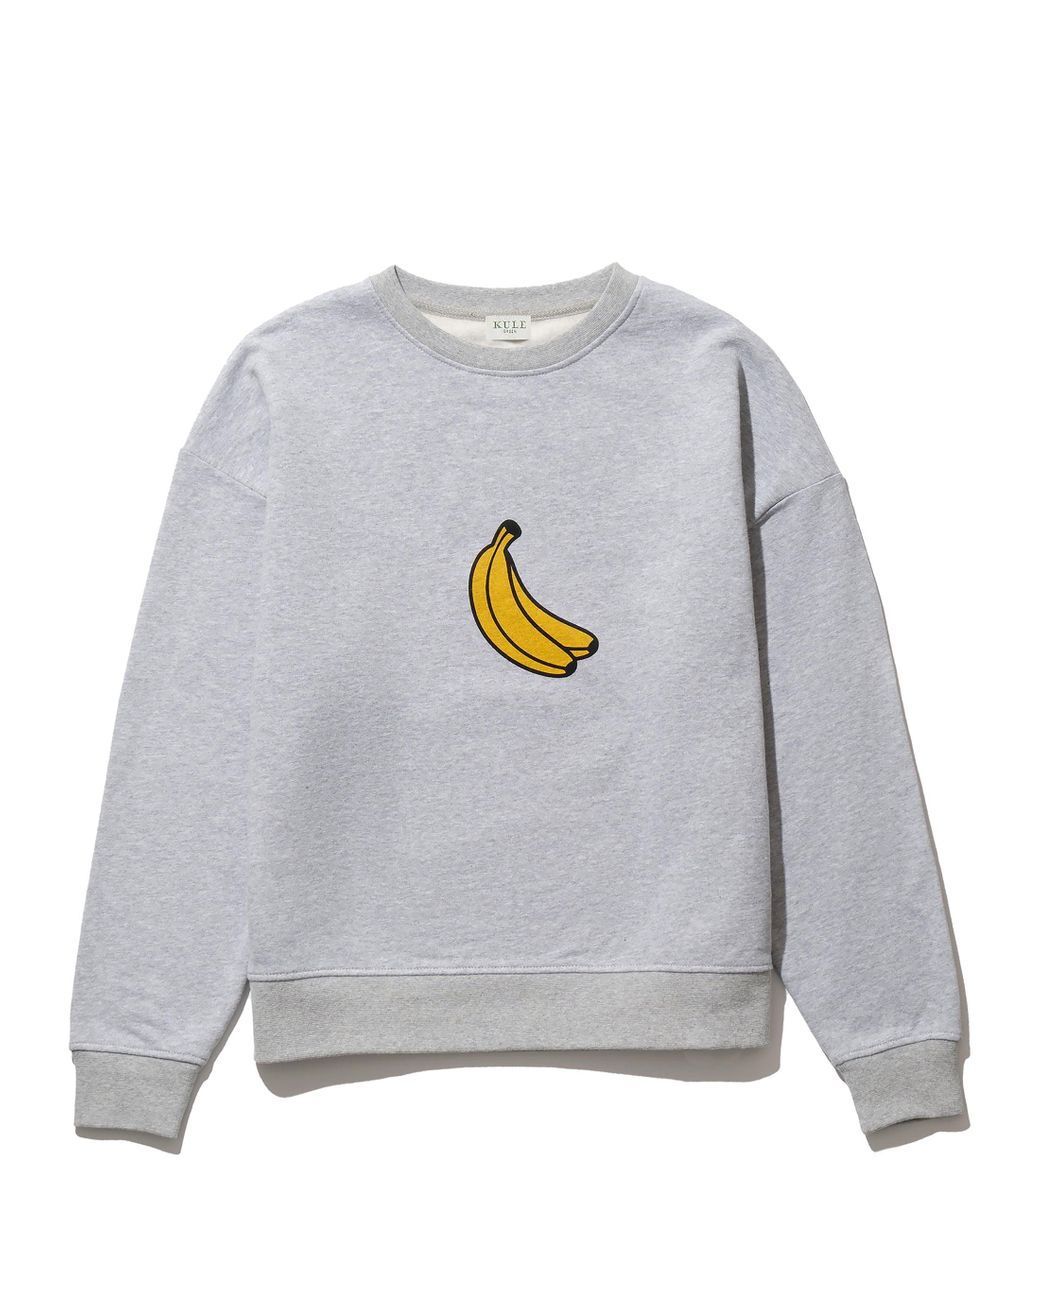 Kule The Oversized Banana Sweatshirt in Gray | Lyst